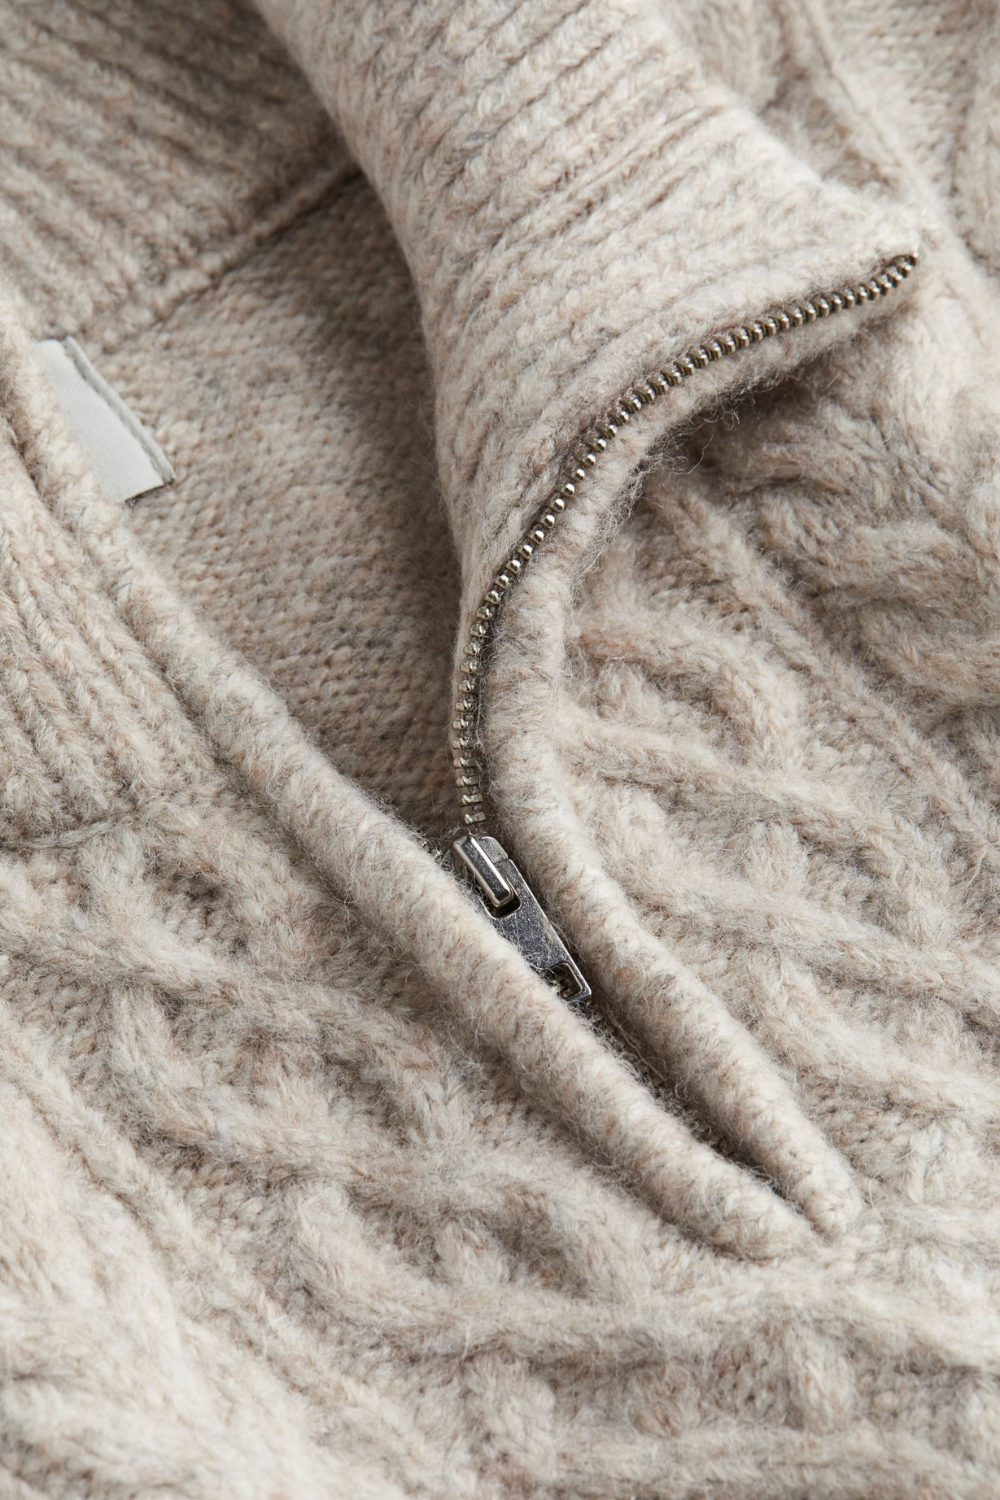 wool-blend sweater